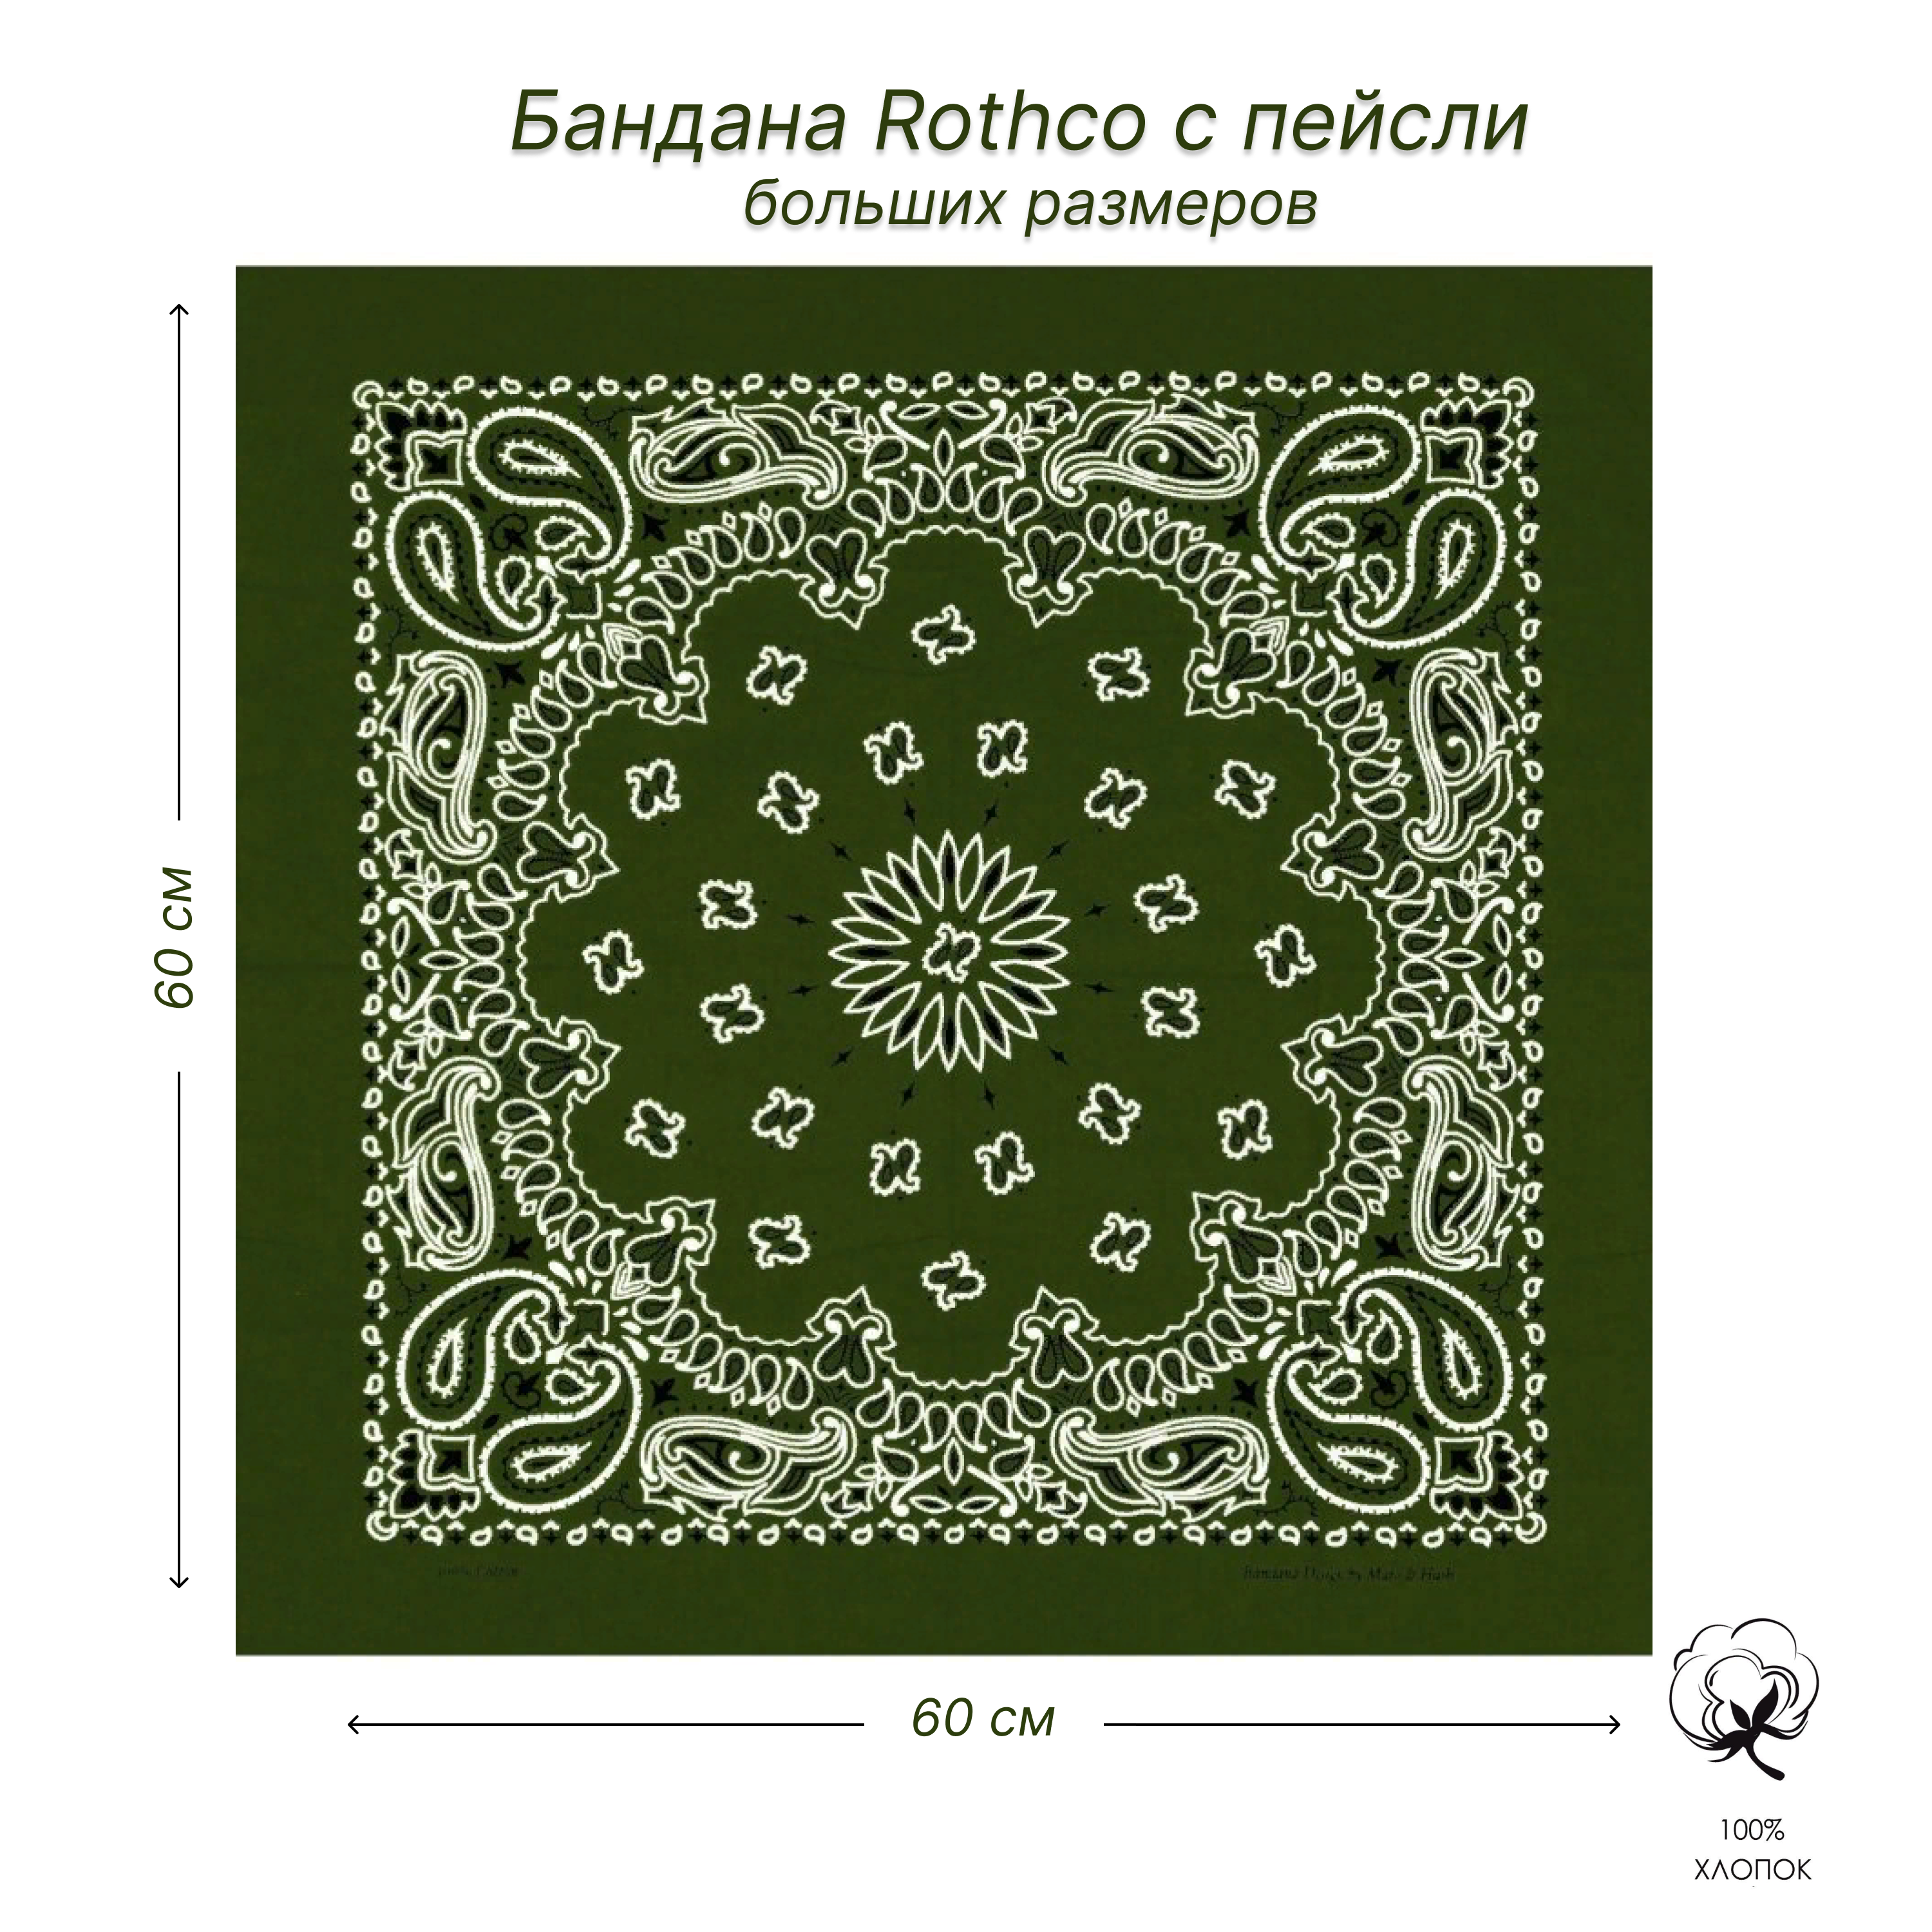 Бандана ROTHCO, размер 60, серый, зеленый